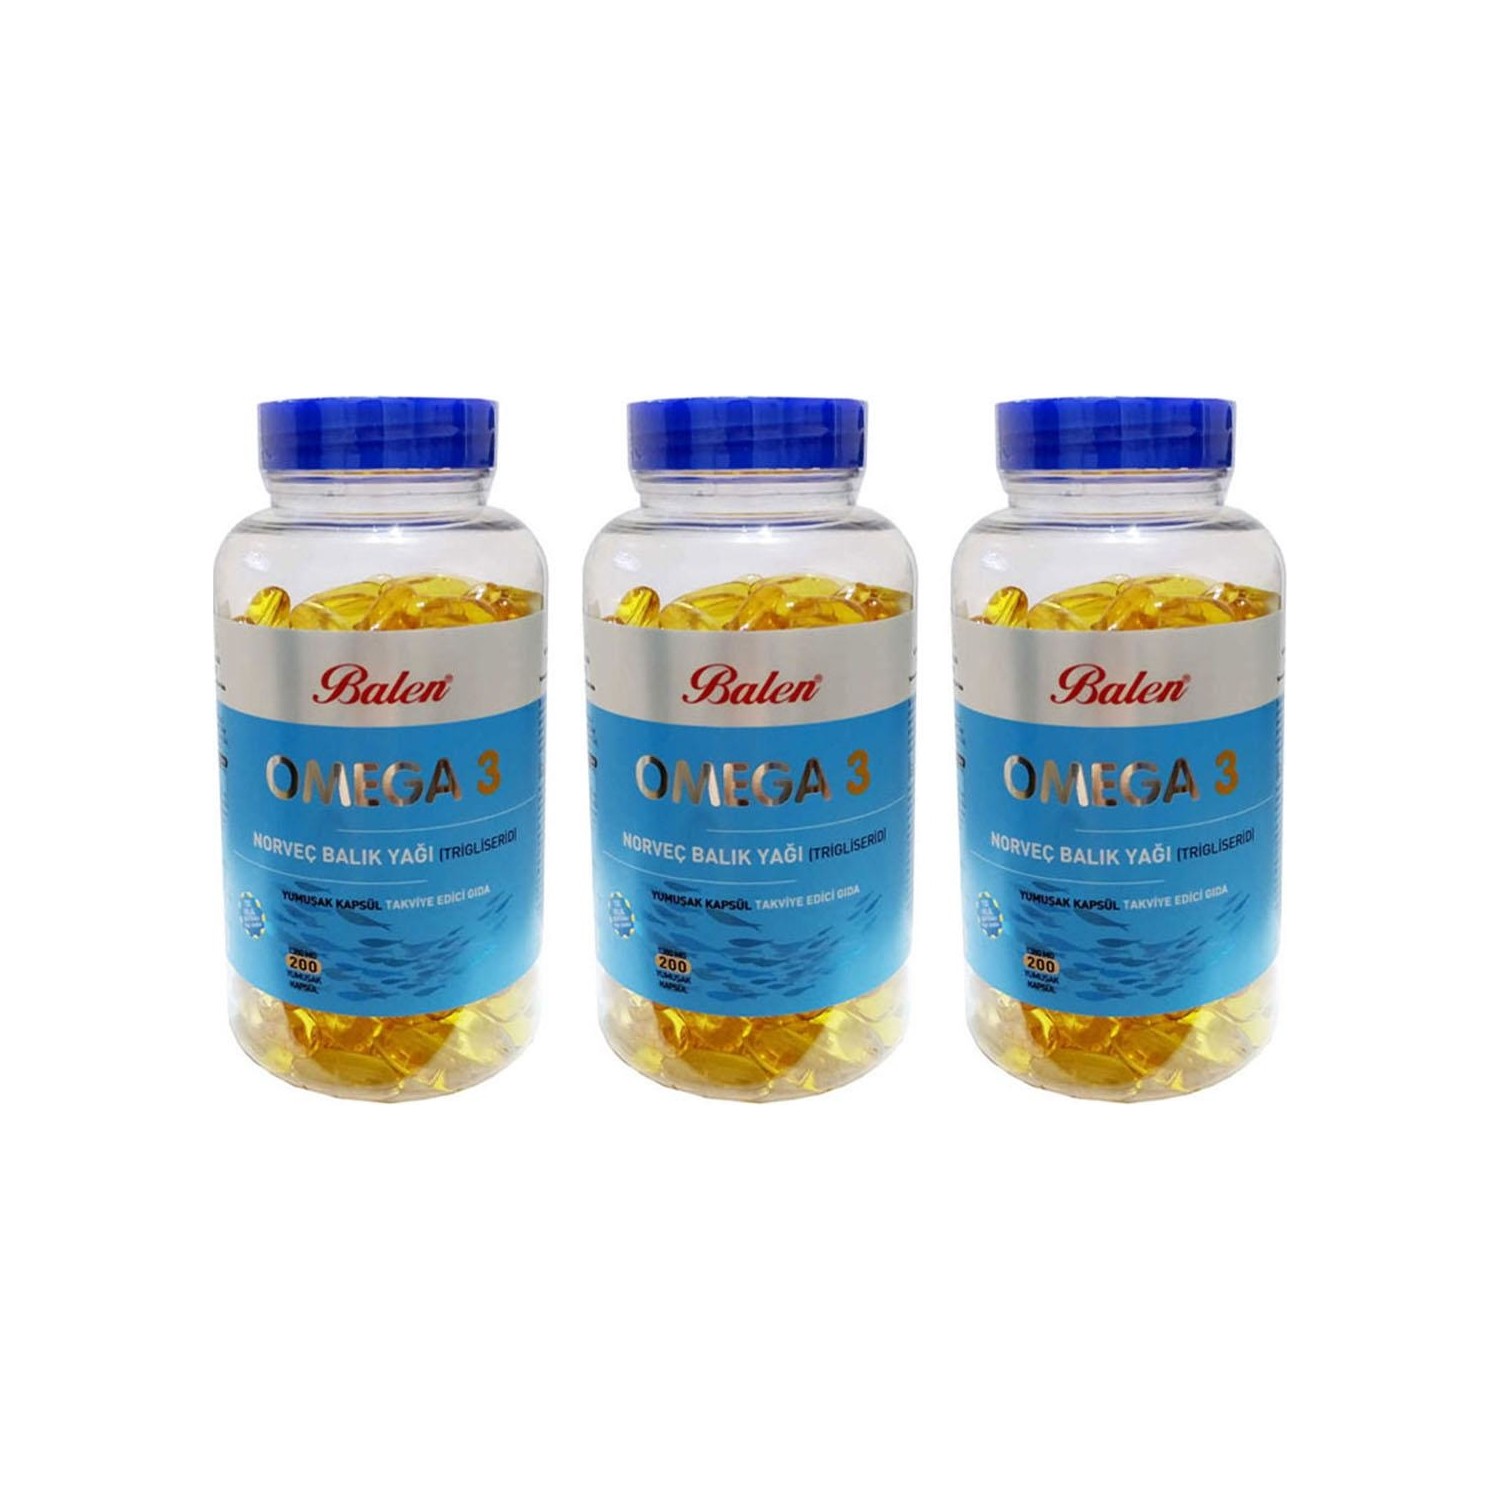 рыбий жир balen omega 3 100 капсул 1380 мг 2 штуки Норвежский рыбий жир Balen Omega-3 1380 мг, 3 упаковки по 200 капсул